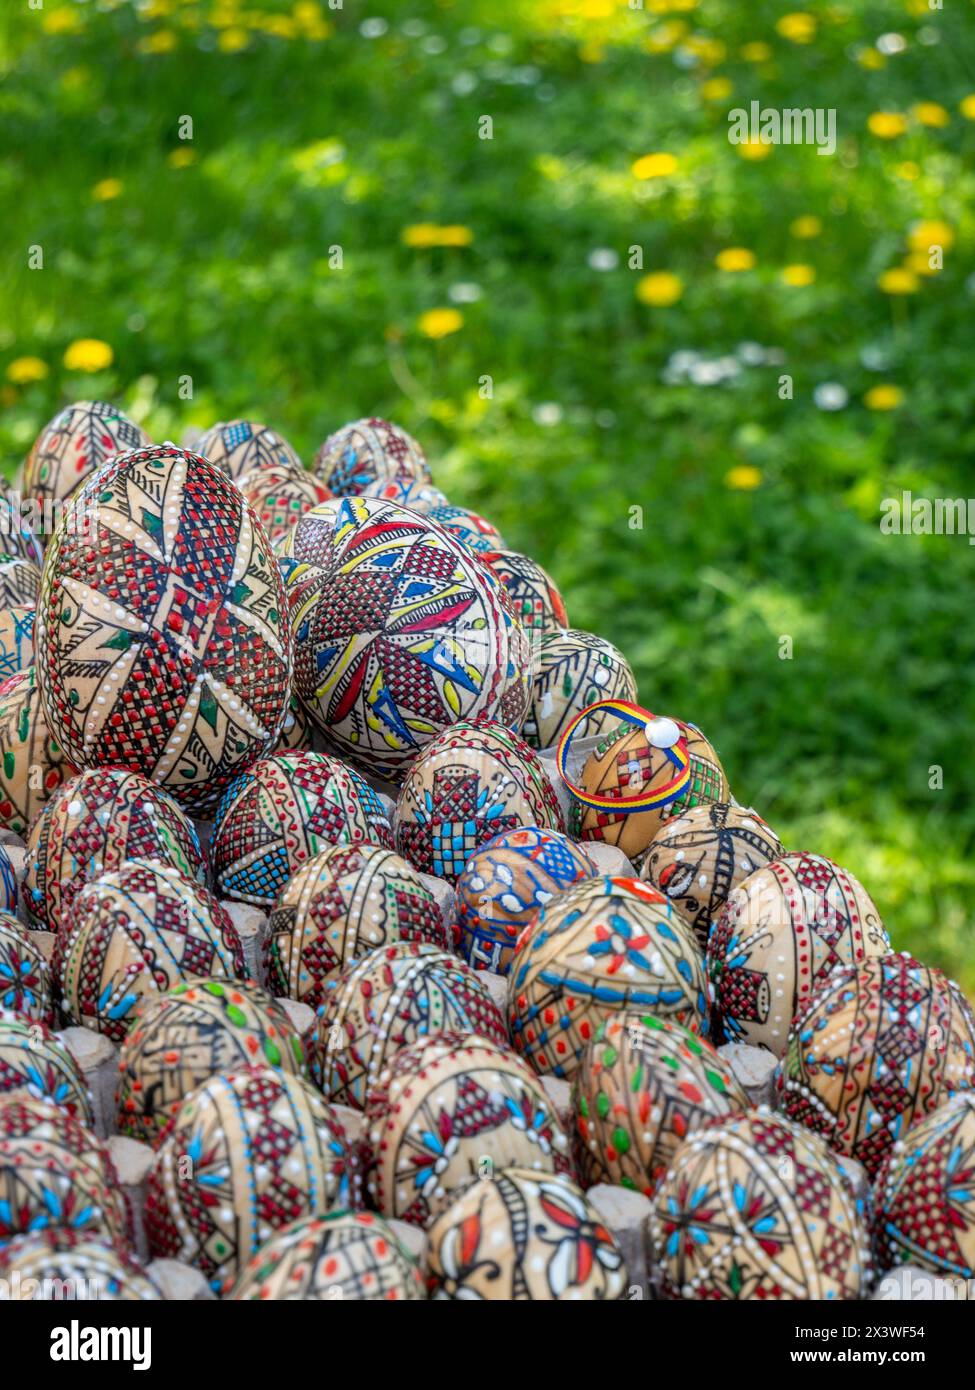 gruppo di uova di pasqua ortodosse rumene decorate in mostra Foto Stock